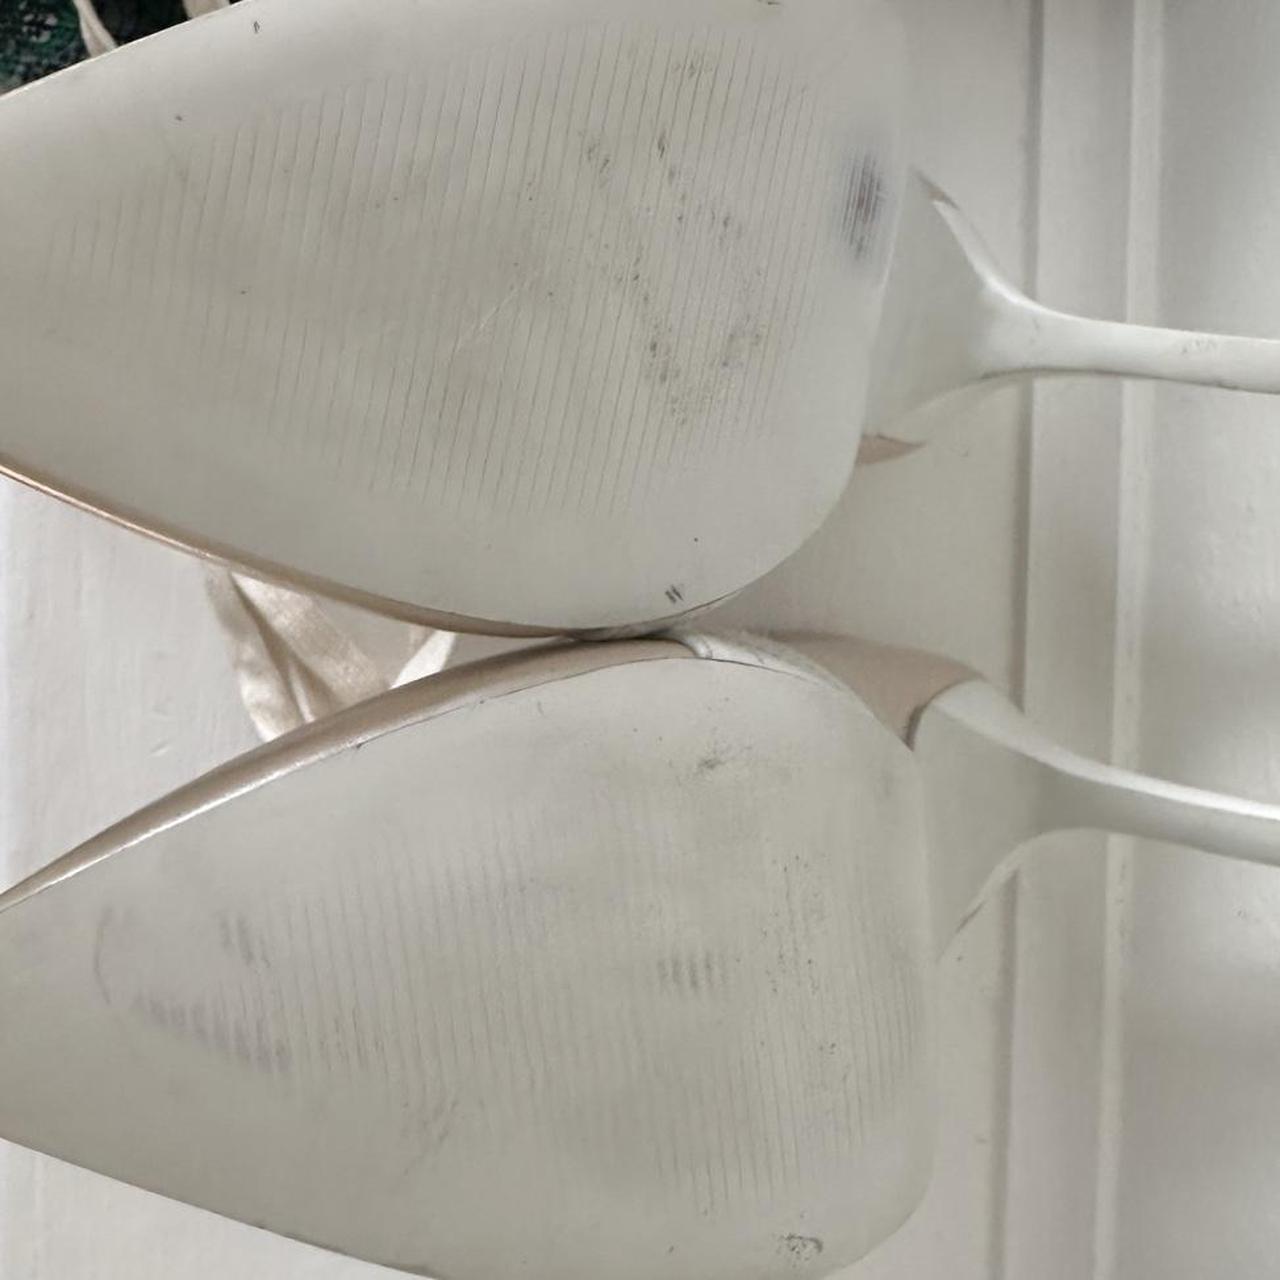 Cape Robbin Women's Cream and White Footwear (4)